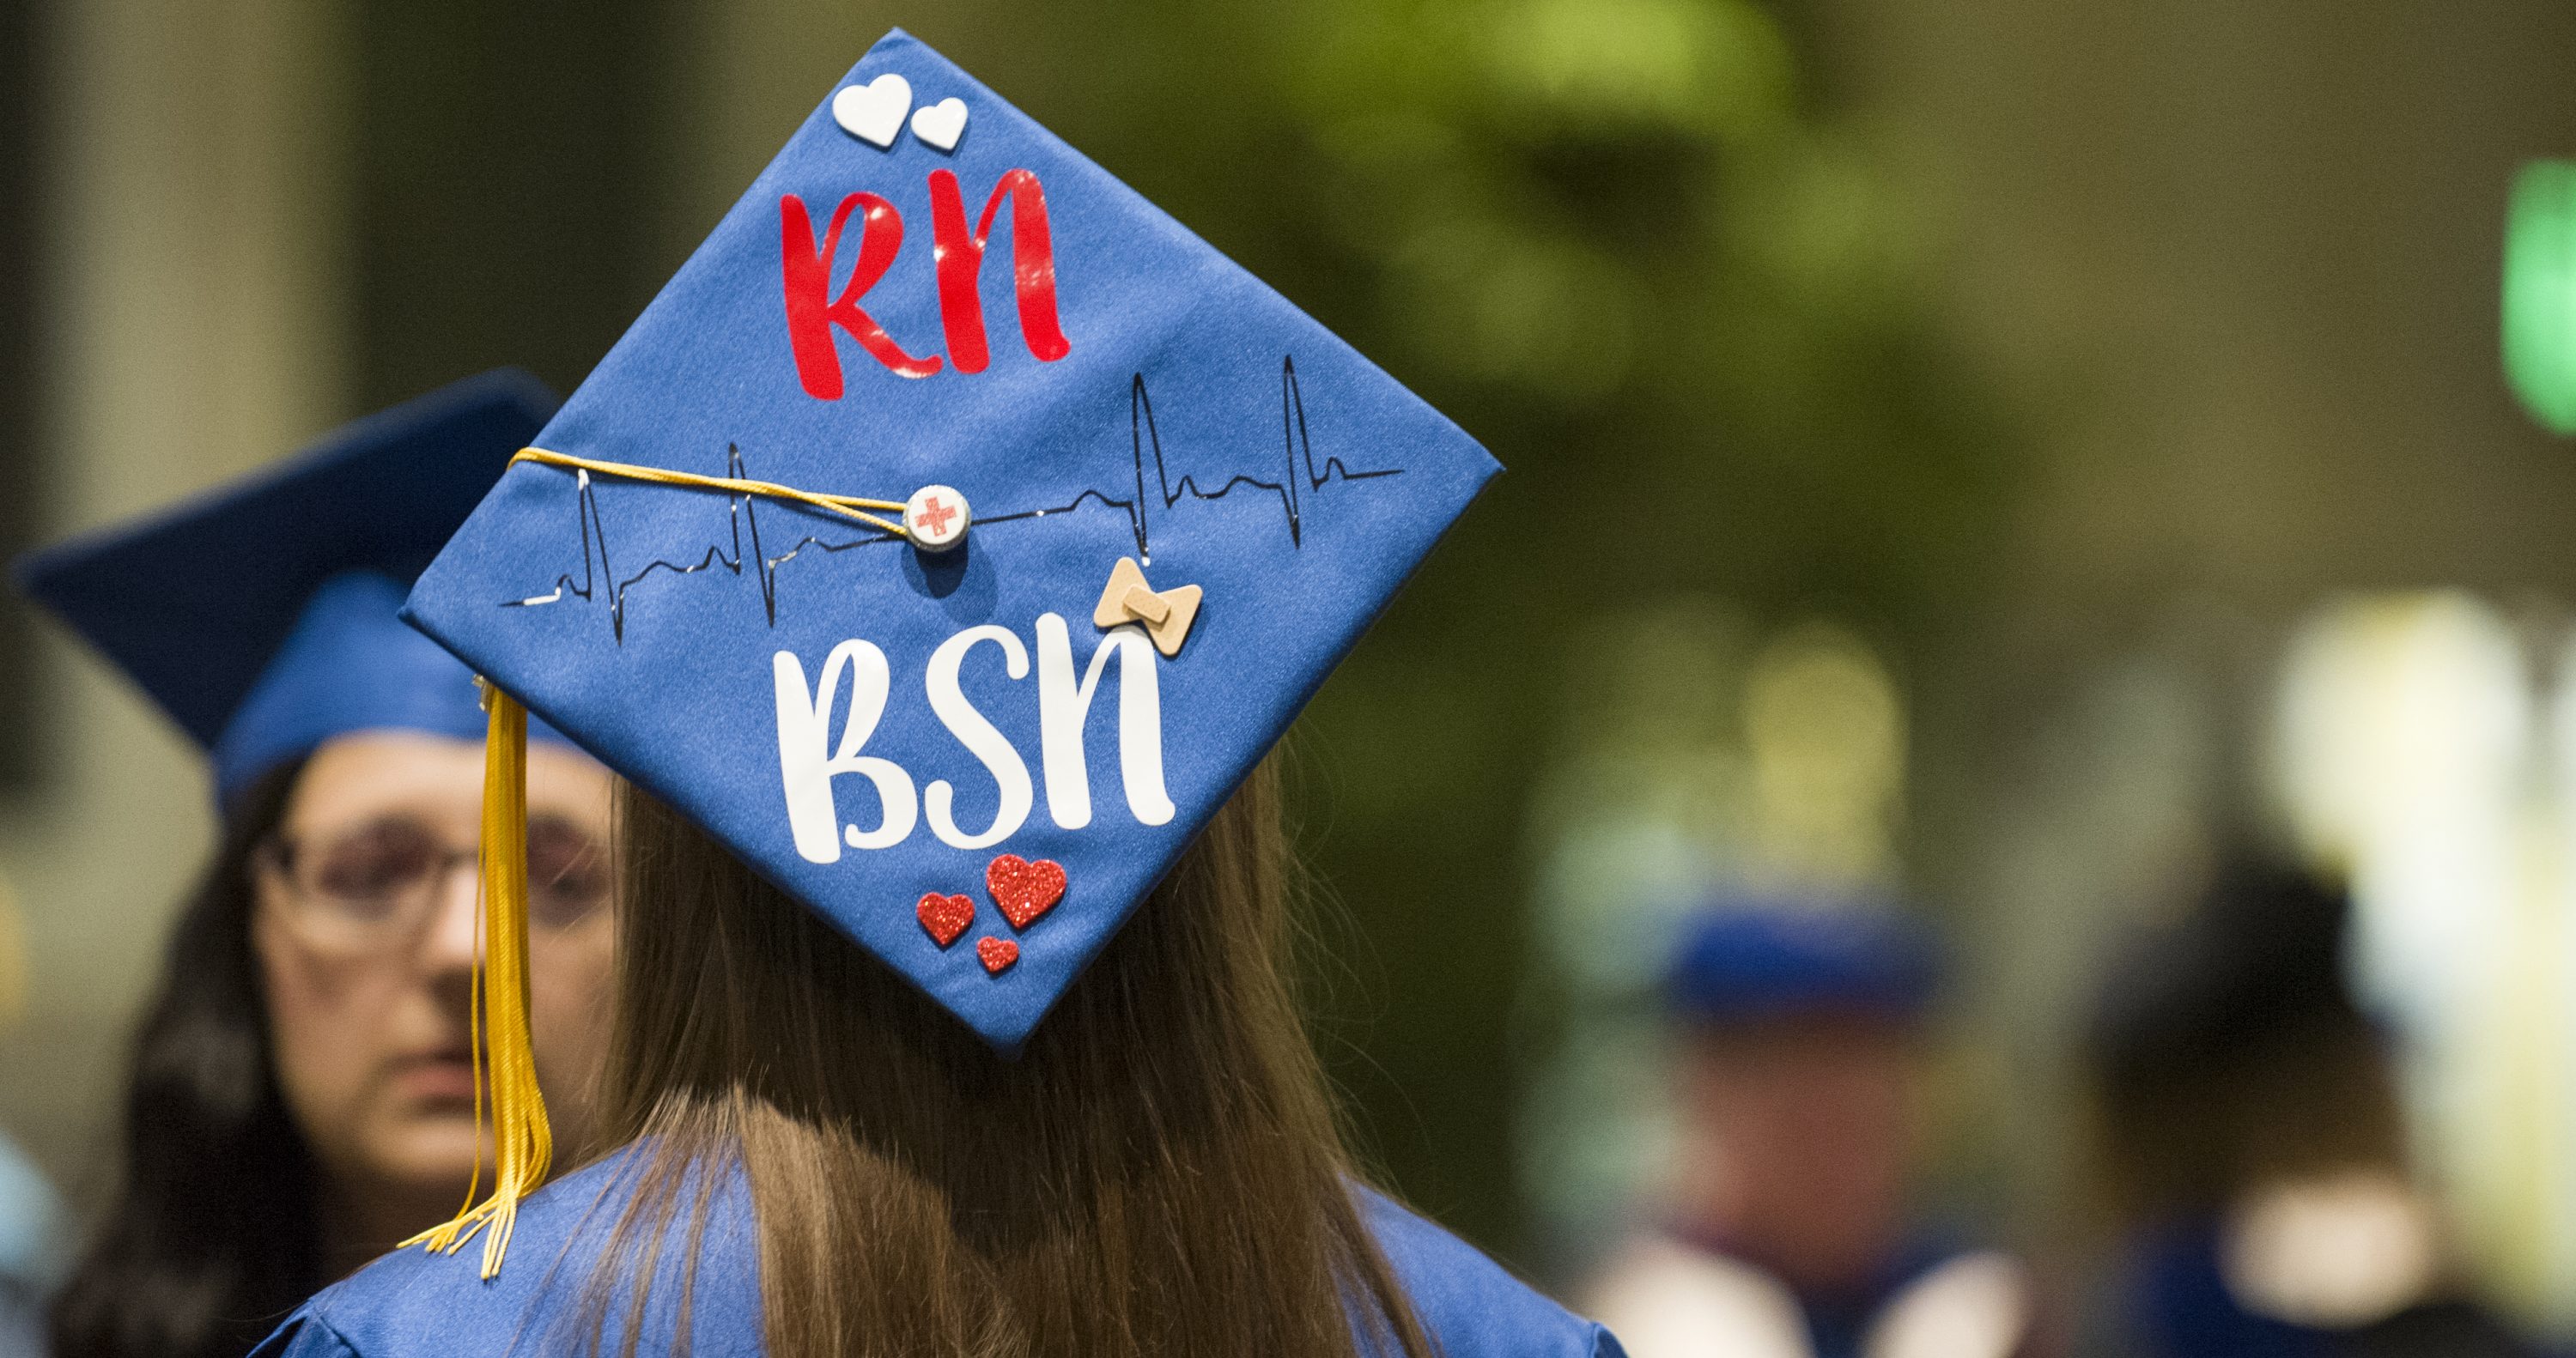 Photo of graduation cap that reads "RN BSN"